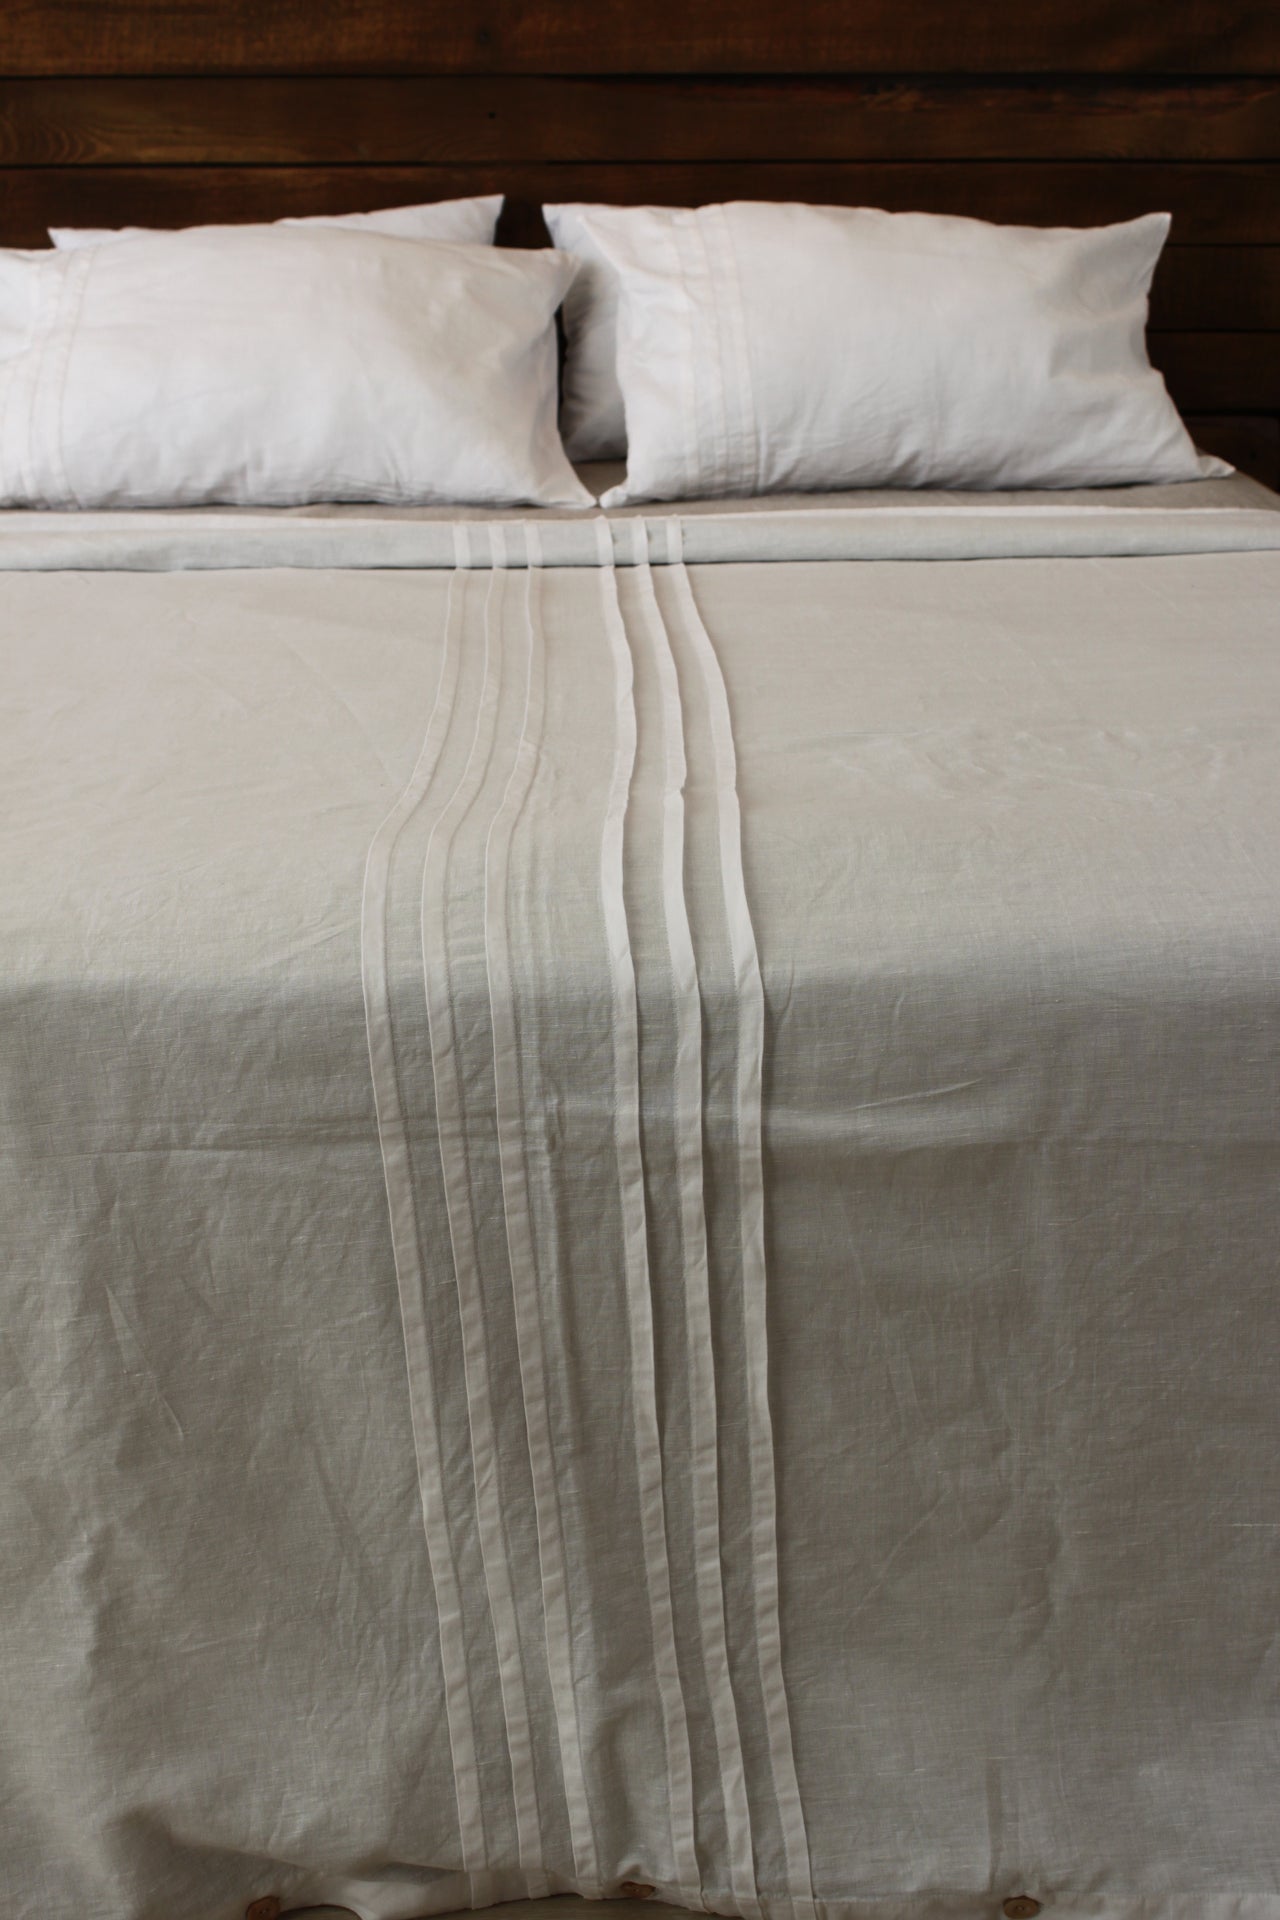 Linen Bedding Set with Pleats